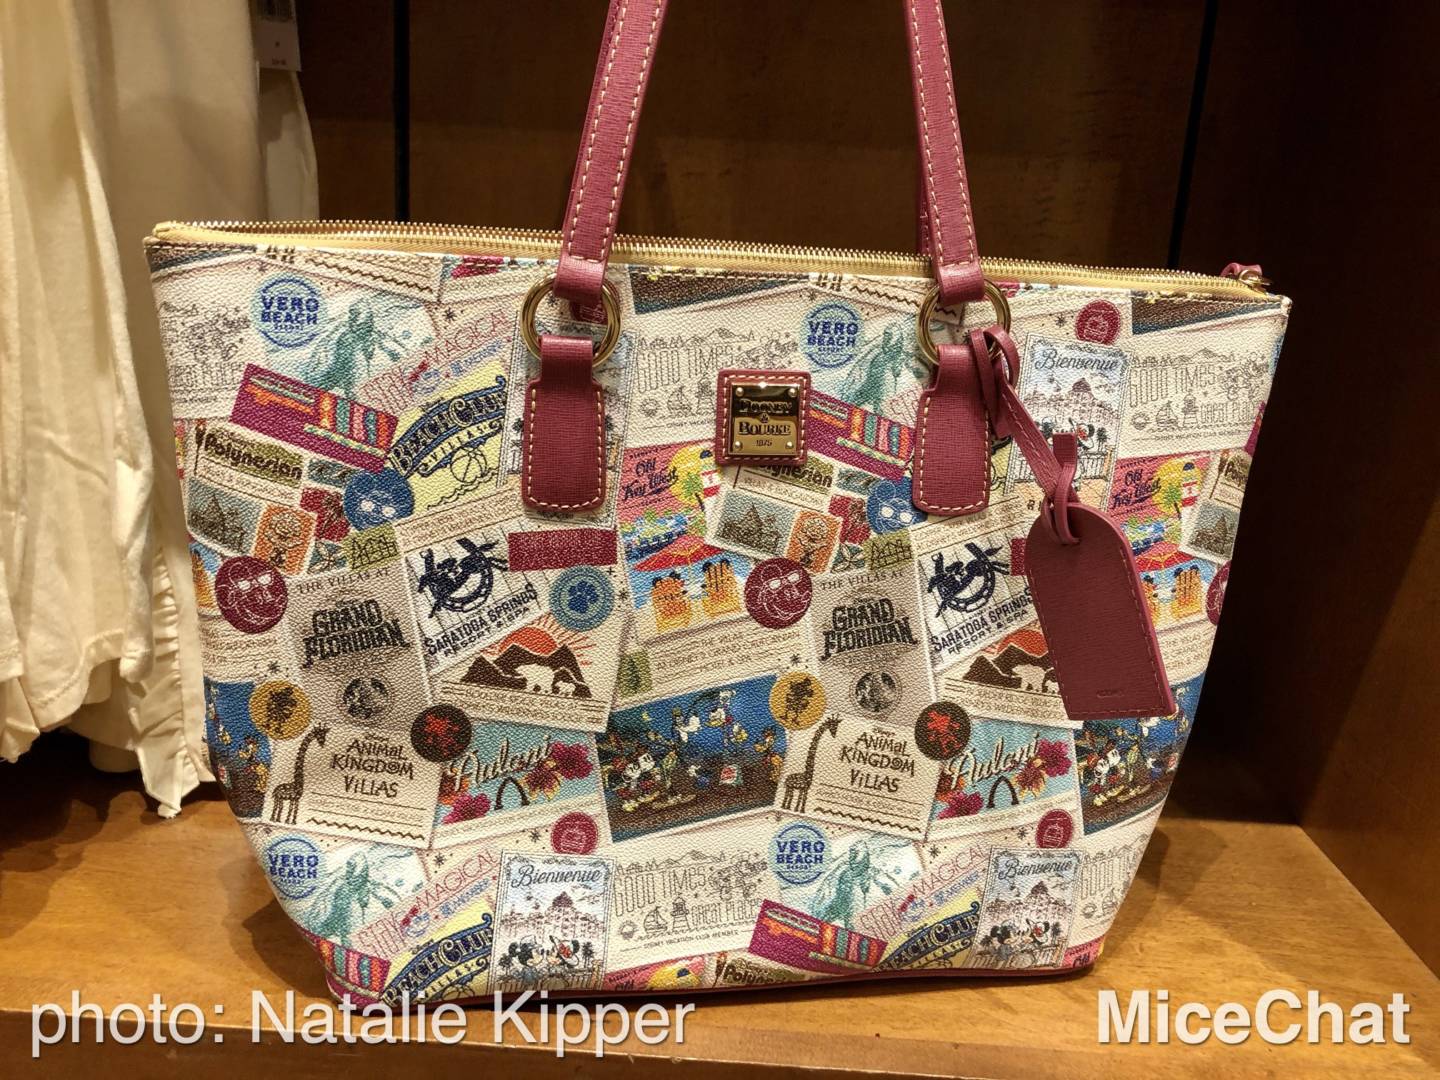 Disney Dooney & Bourke Bag - Disney Vacation Club - Satchel Bag